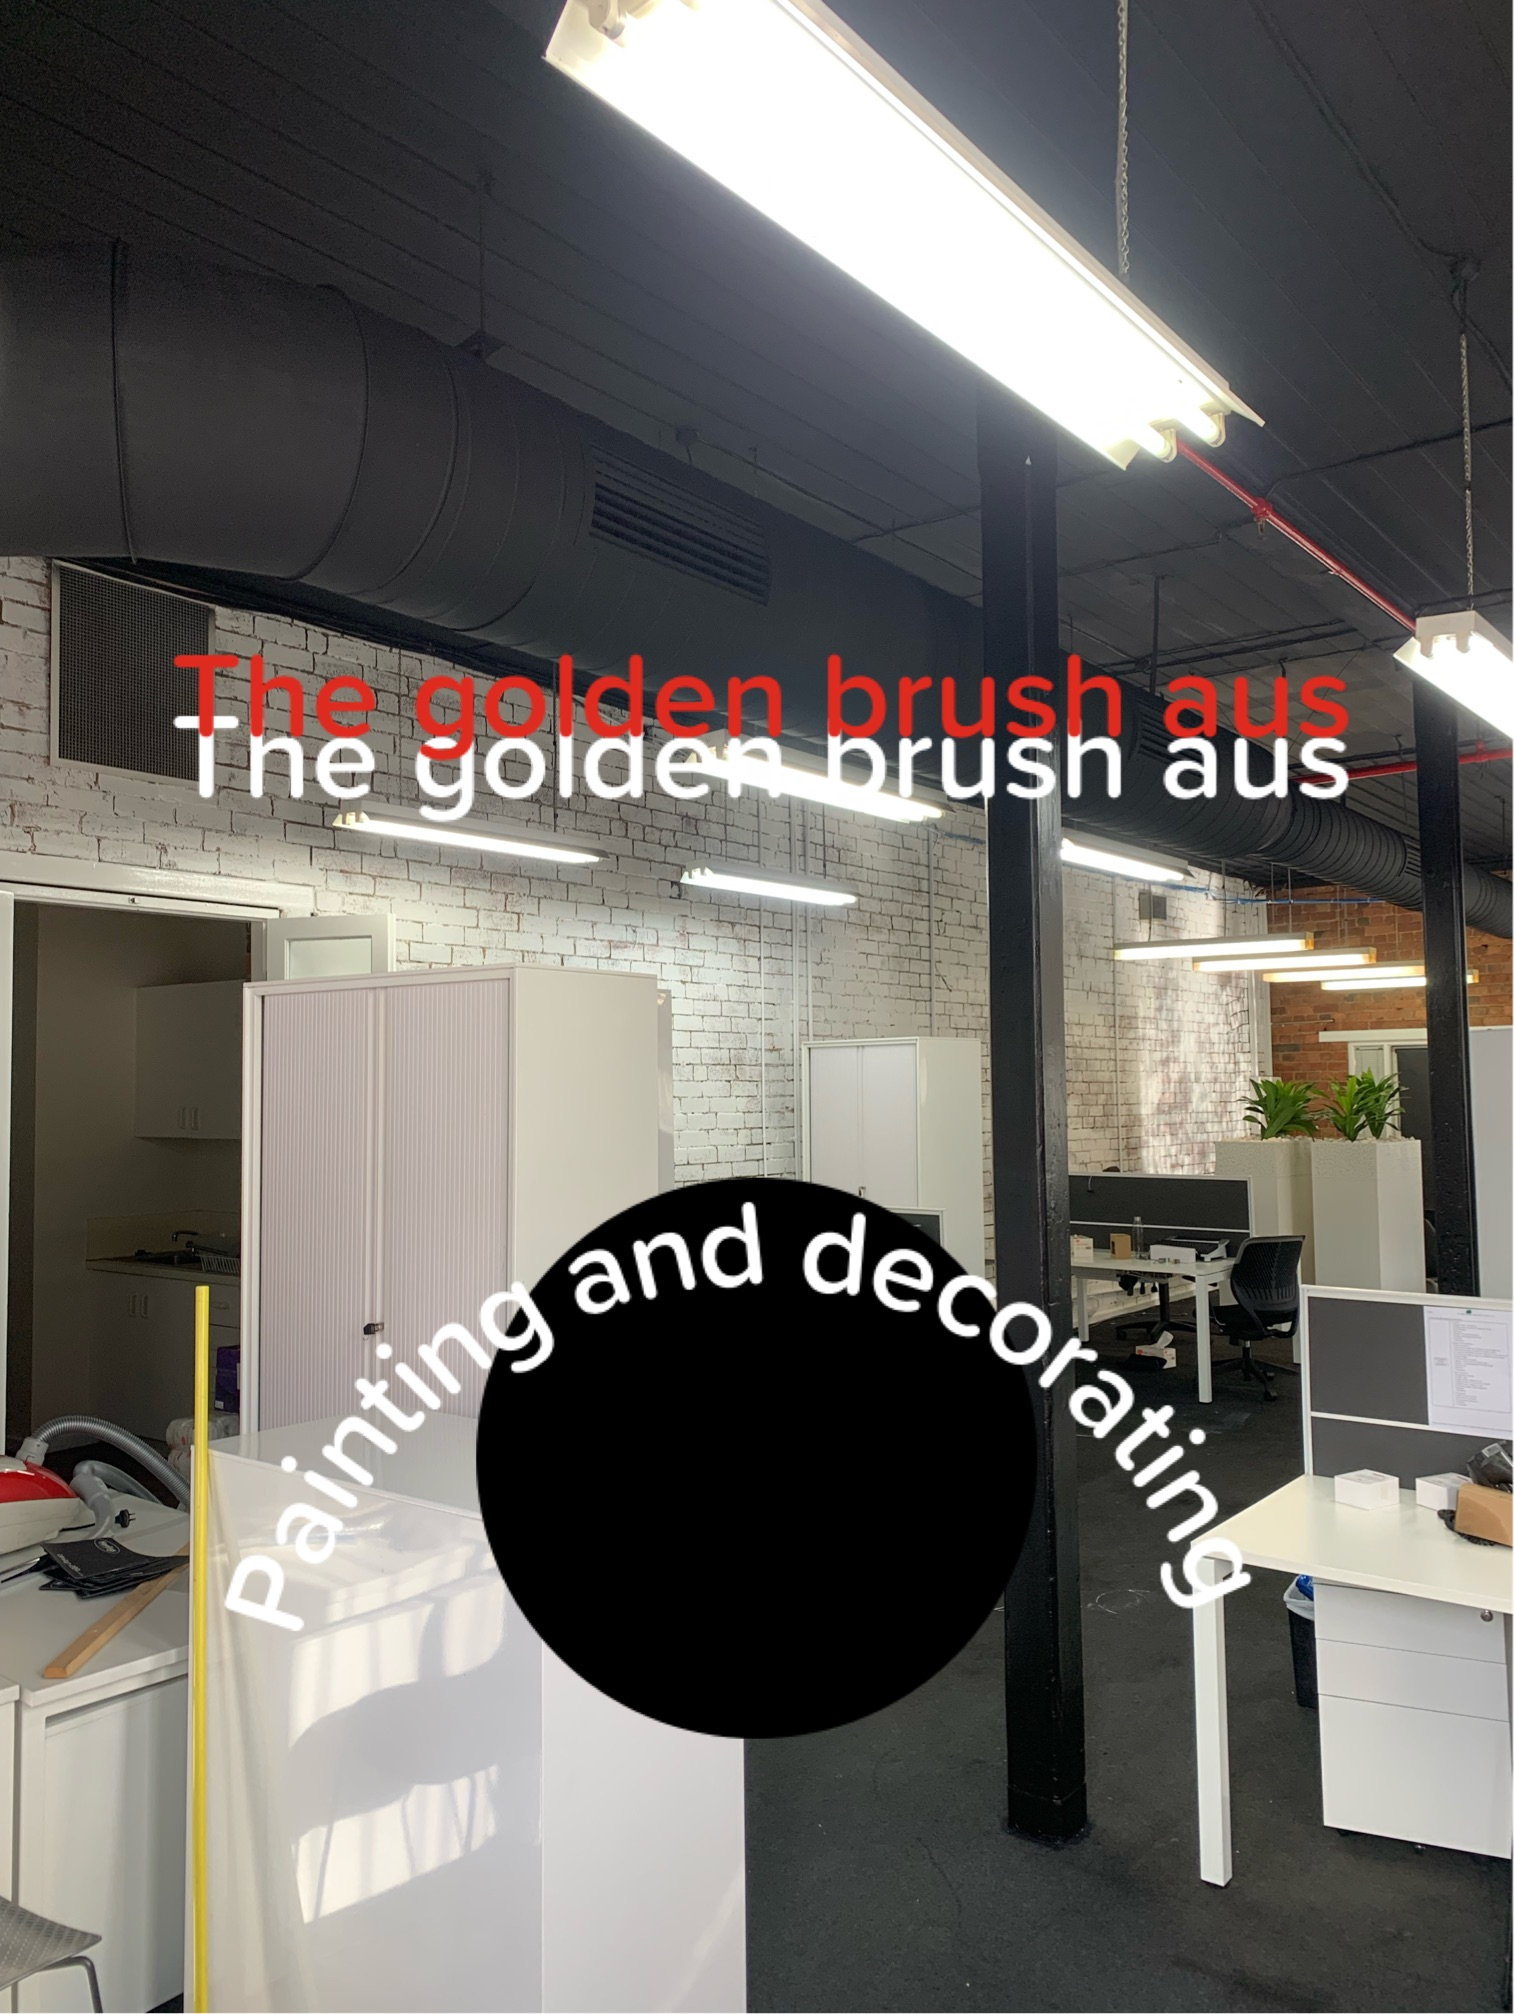 The Golden Brush aus